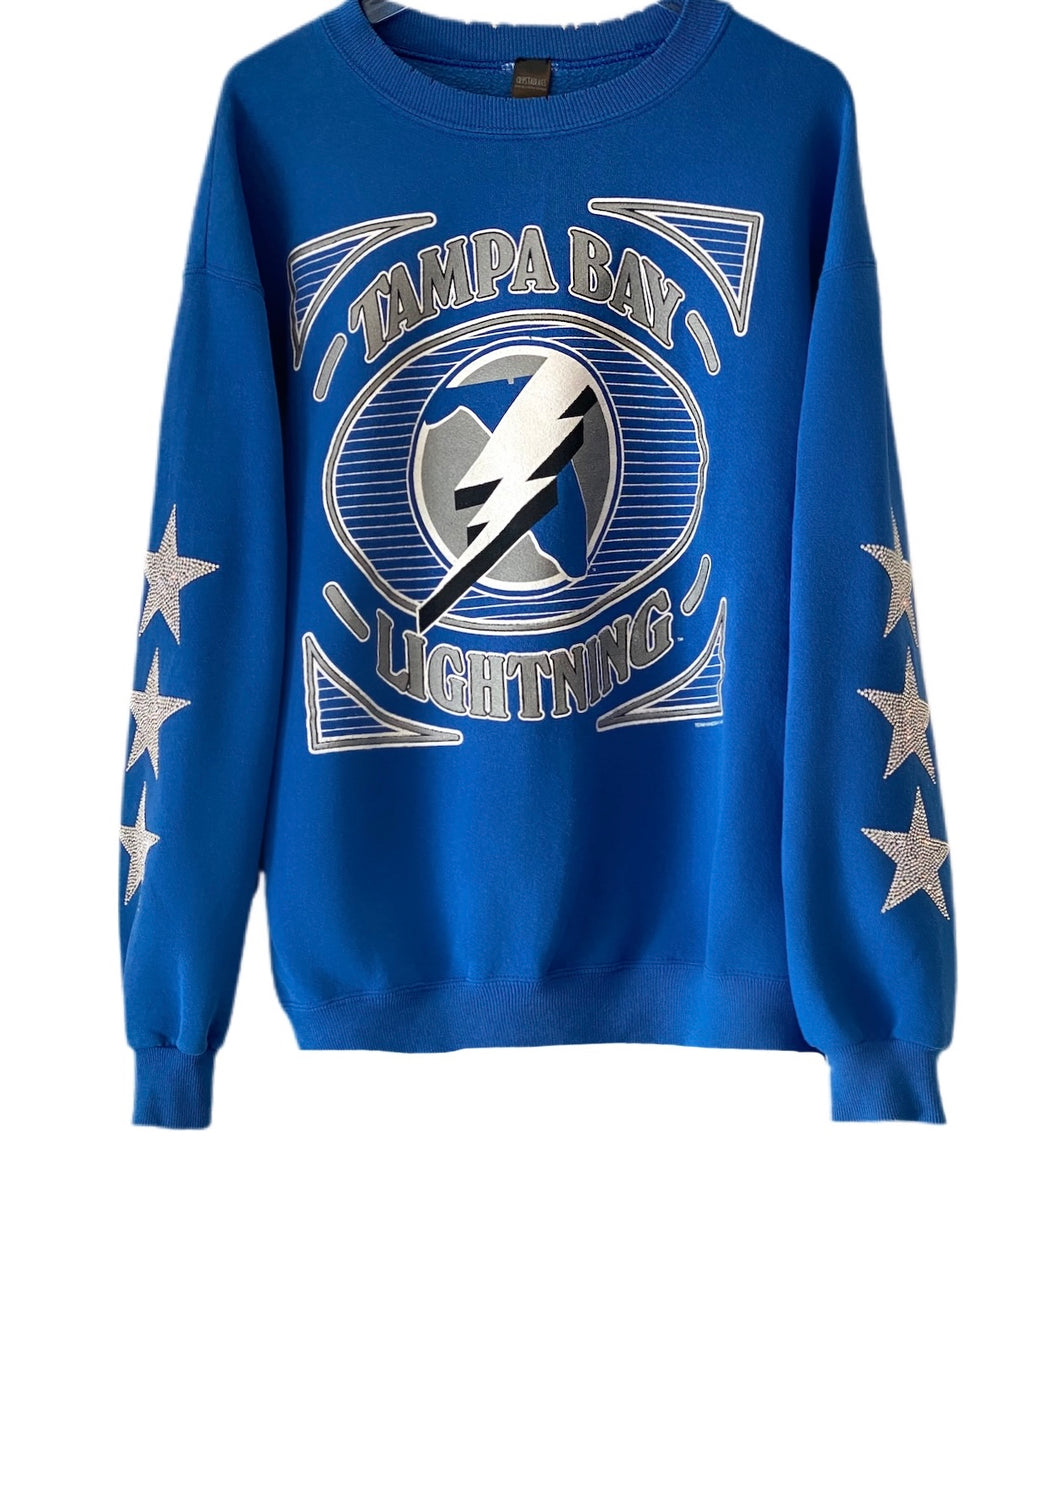 Tampa Bay Lightning, NHL One of a KIND Vintage Sweatshirt with Three Crystal Star Design